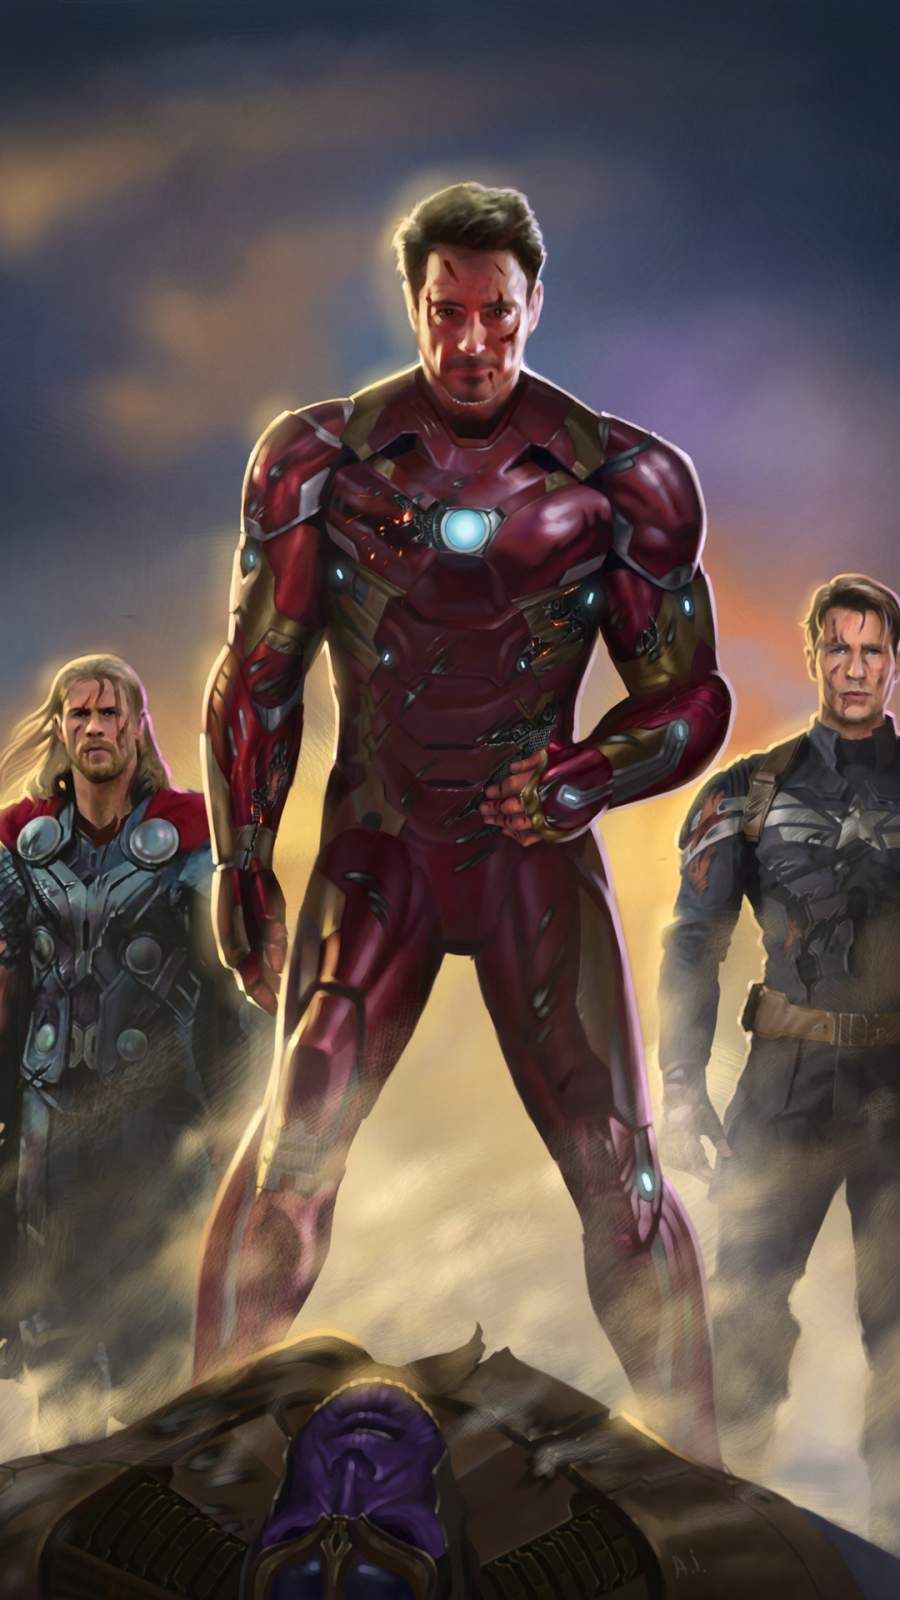 Iron Man Captain America Thor Fan Art IPhone Wallpaper. Iron man HD wallpaper, Iron man captain america, Iron man